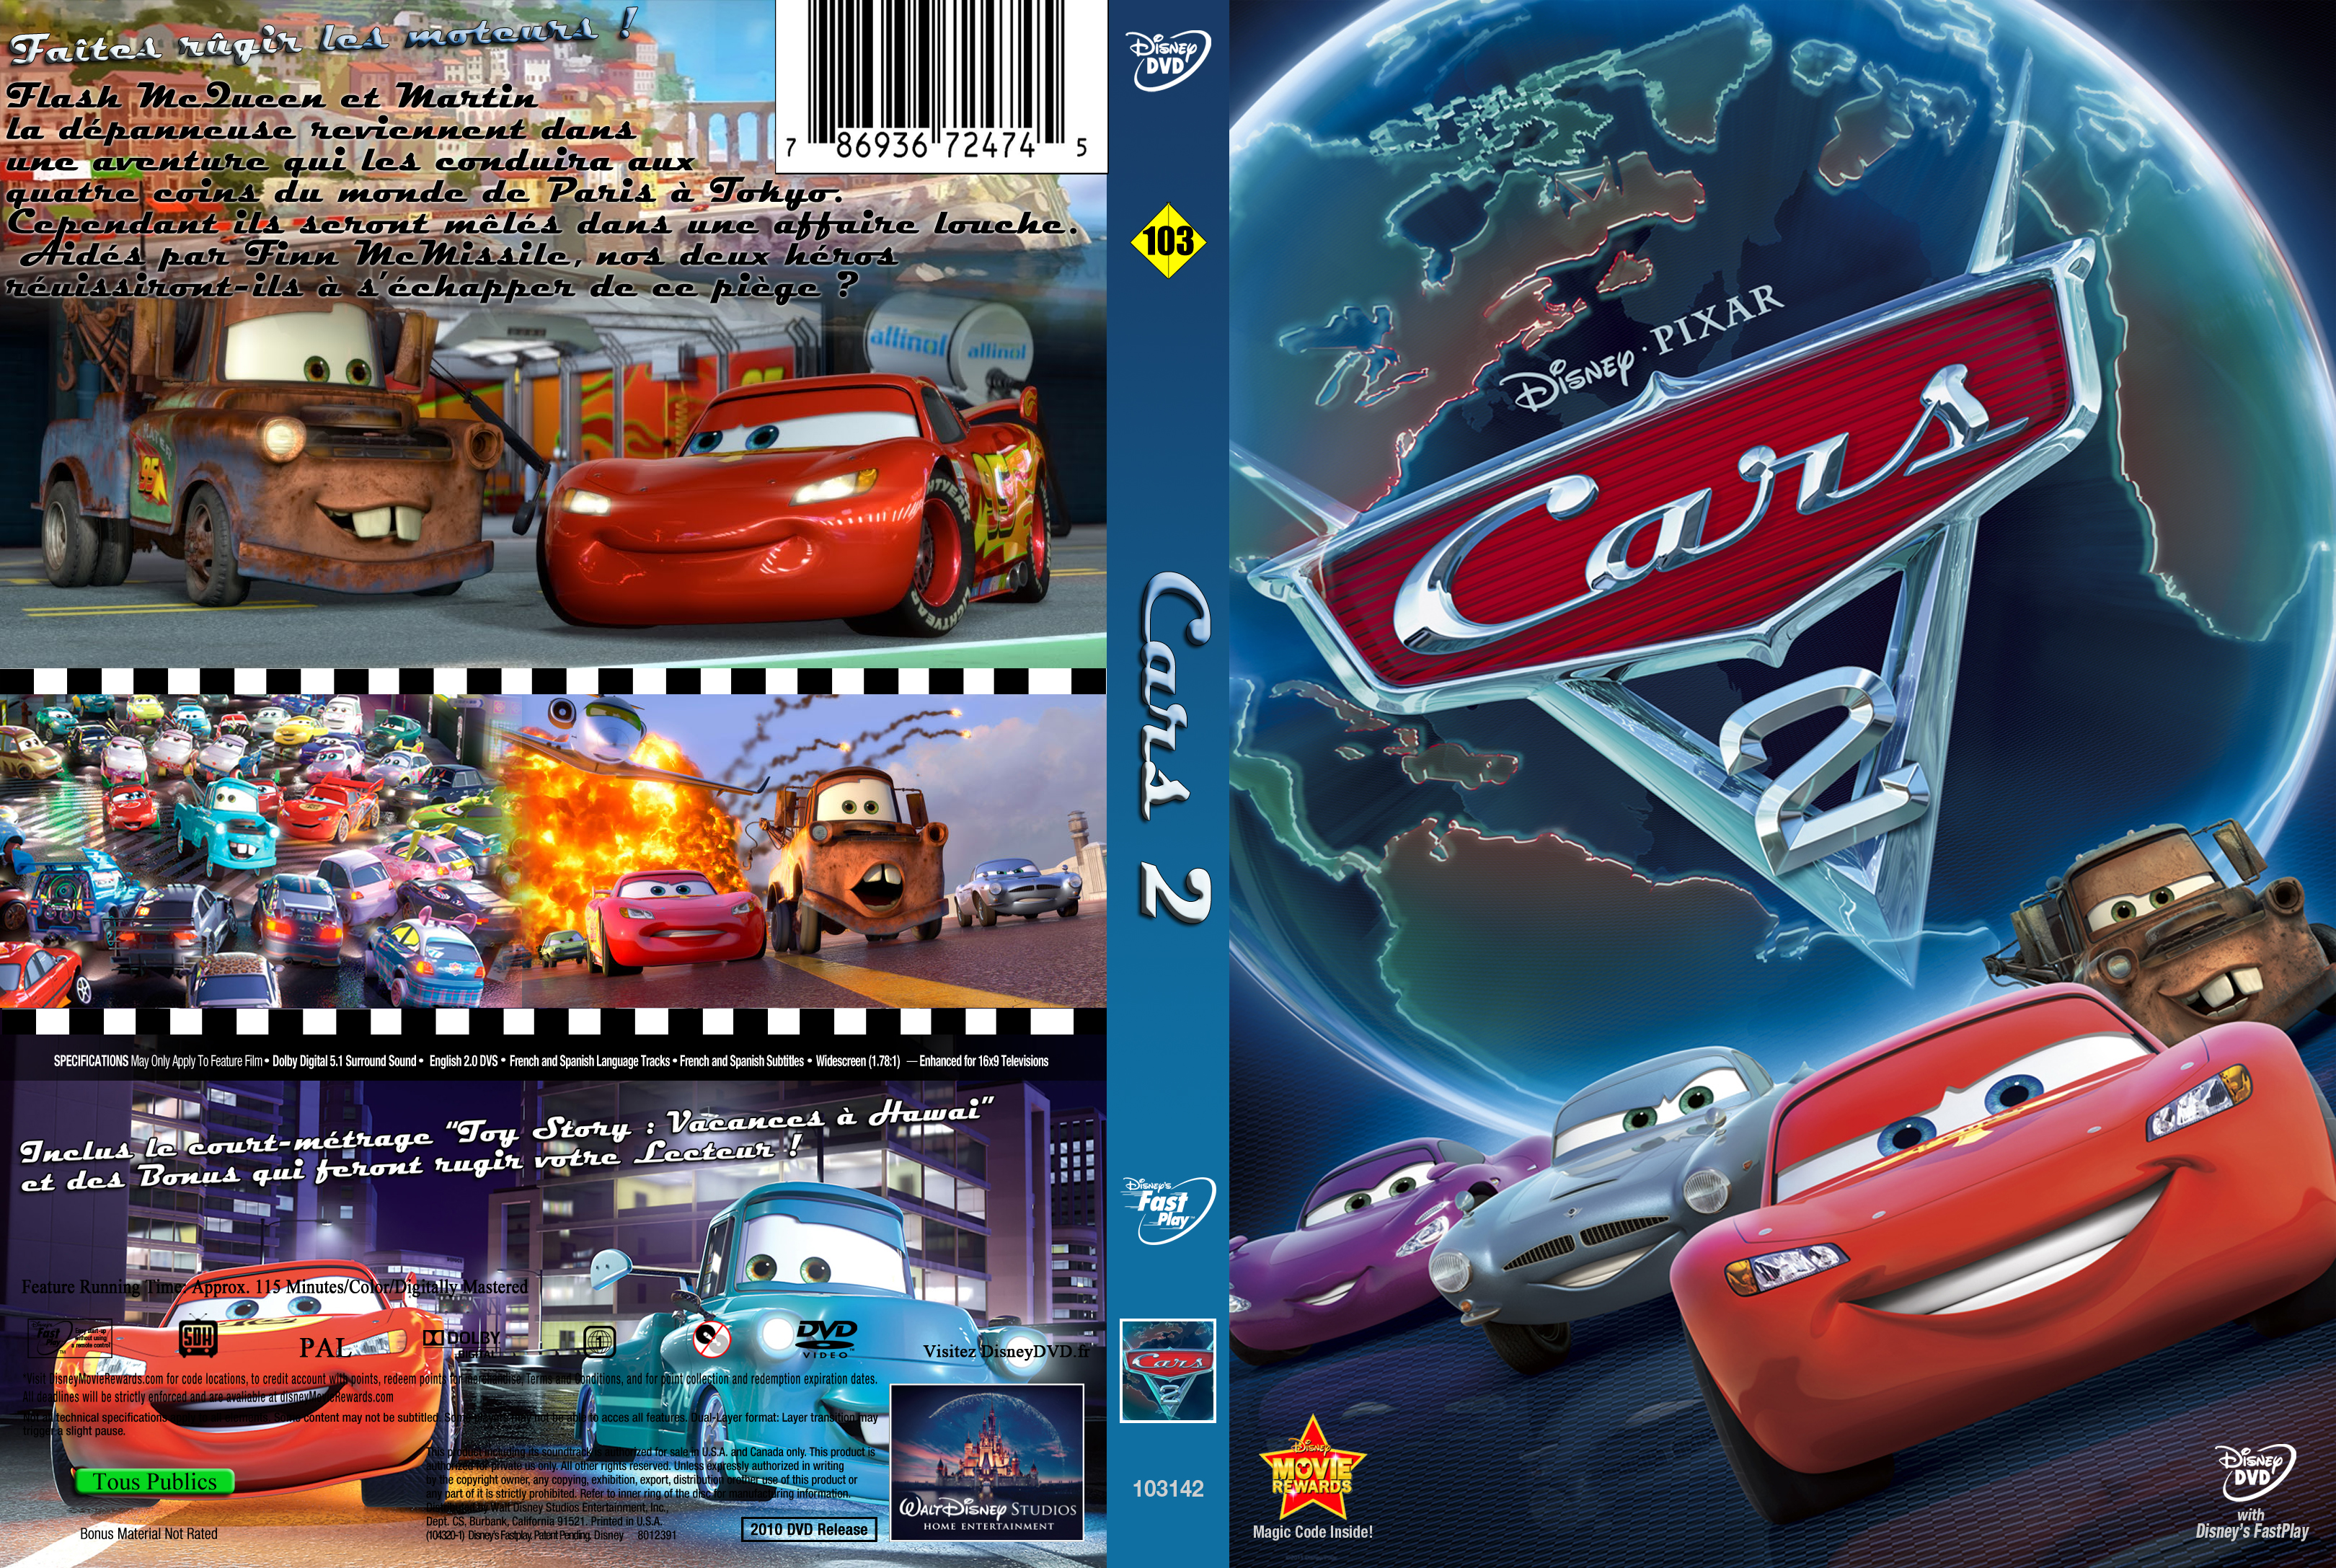 Cars 2 Dvd